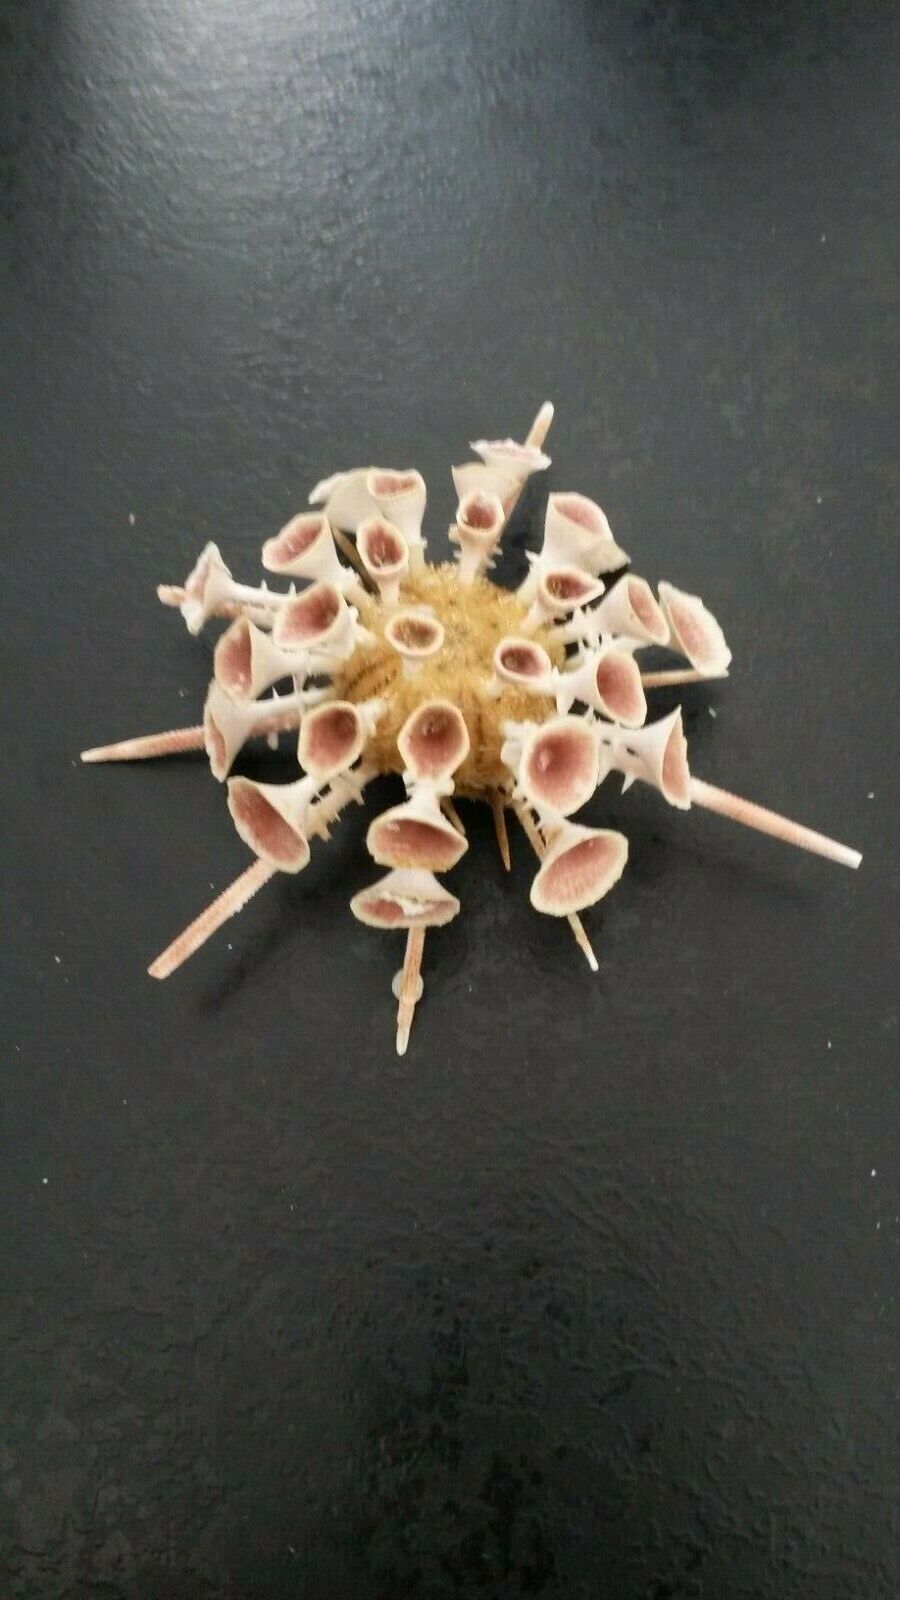 Rare Beautiful Goniocidaris Mikado Sea Urchin Current Bohol Philippines DD